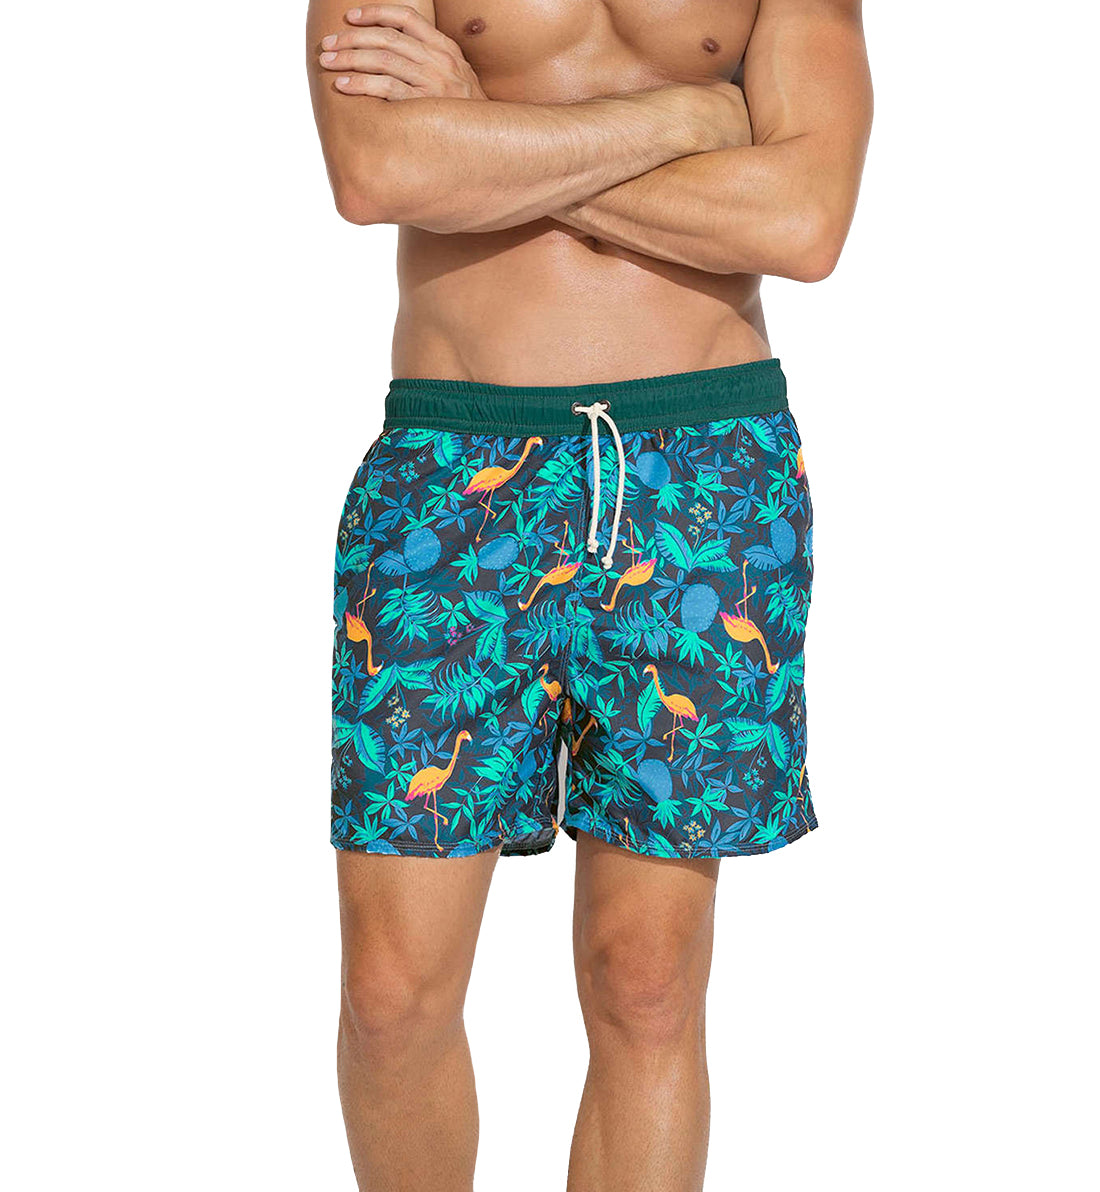 LEO Men's Short Loose Fit Contrast Swim Trunk (505024),Medium,Tropical Blue - Tropical Blue,Medium